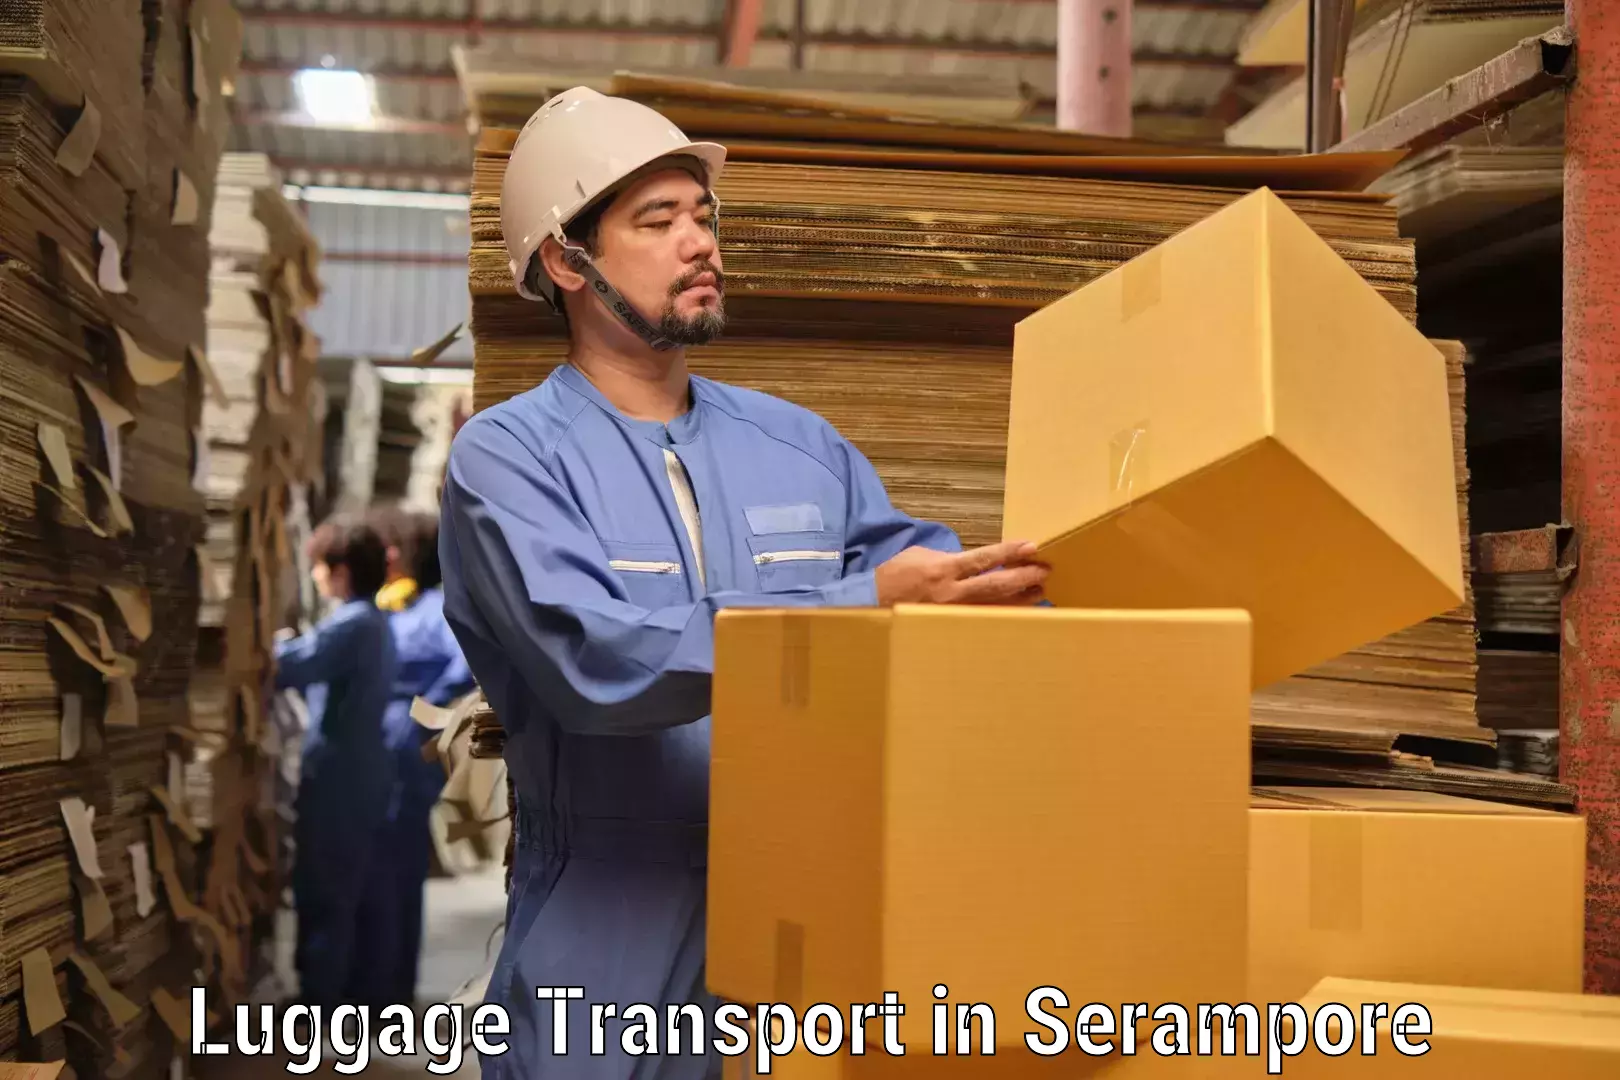 Baggage transport services in Serampore